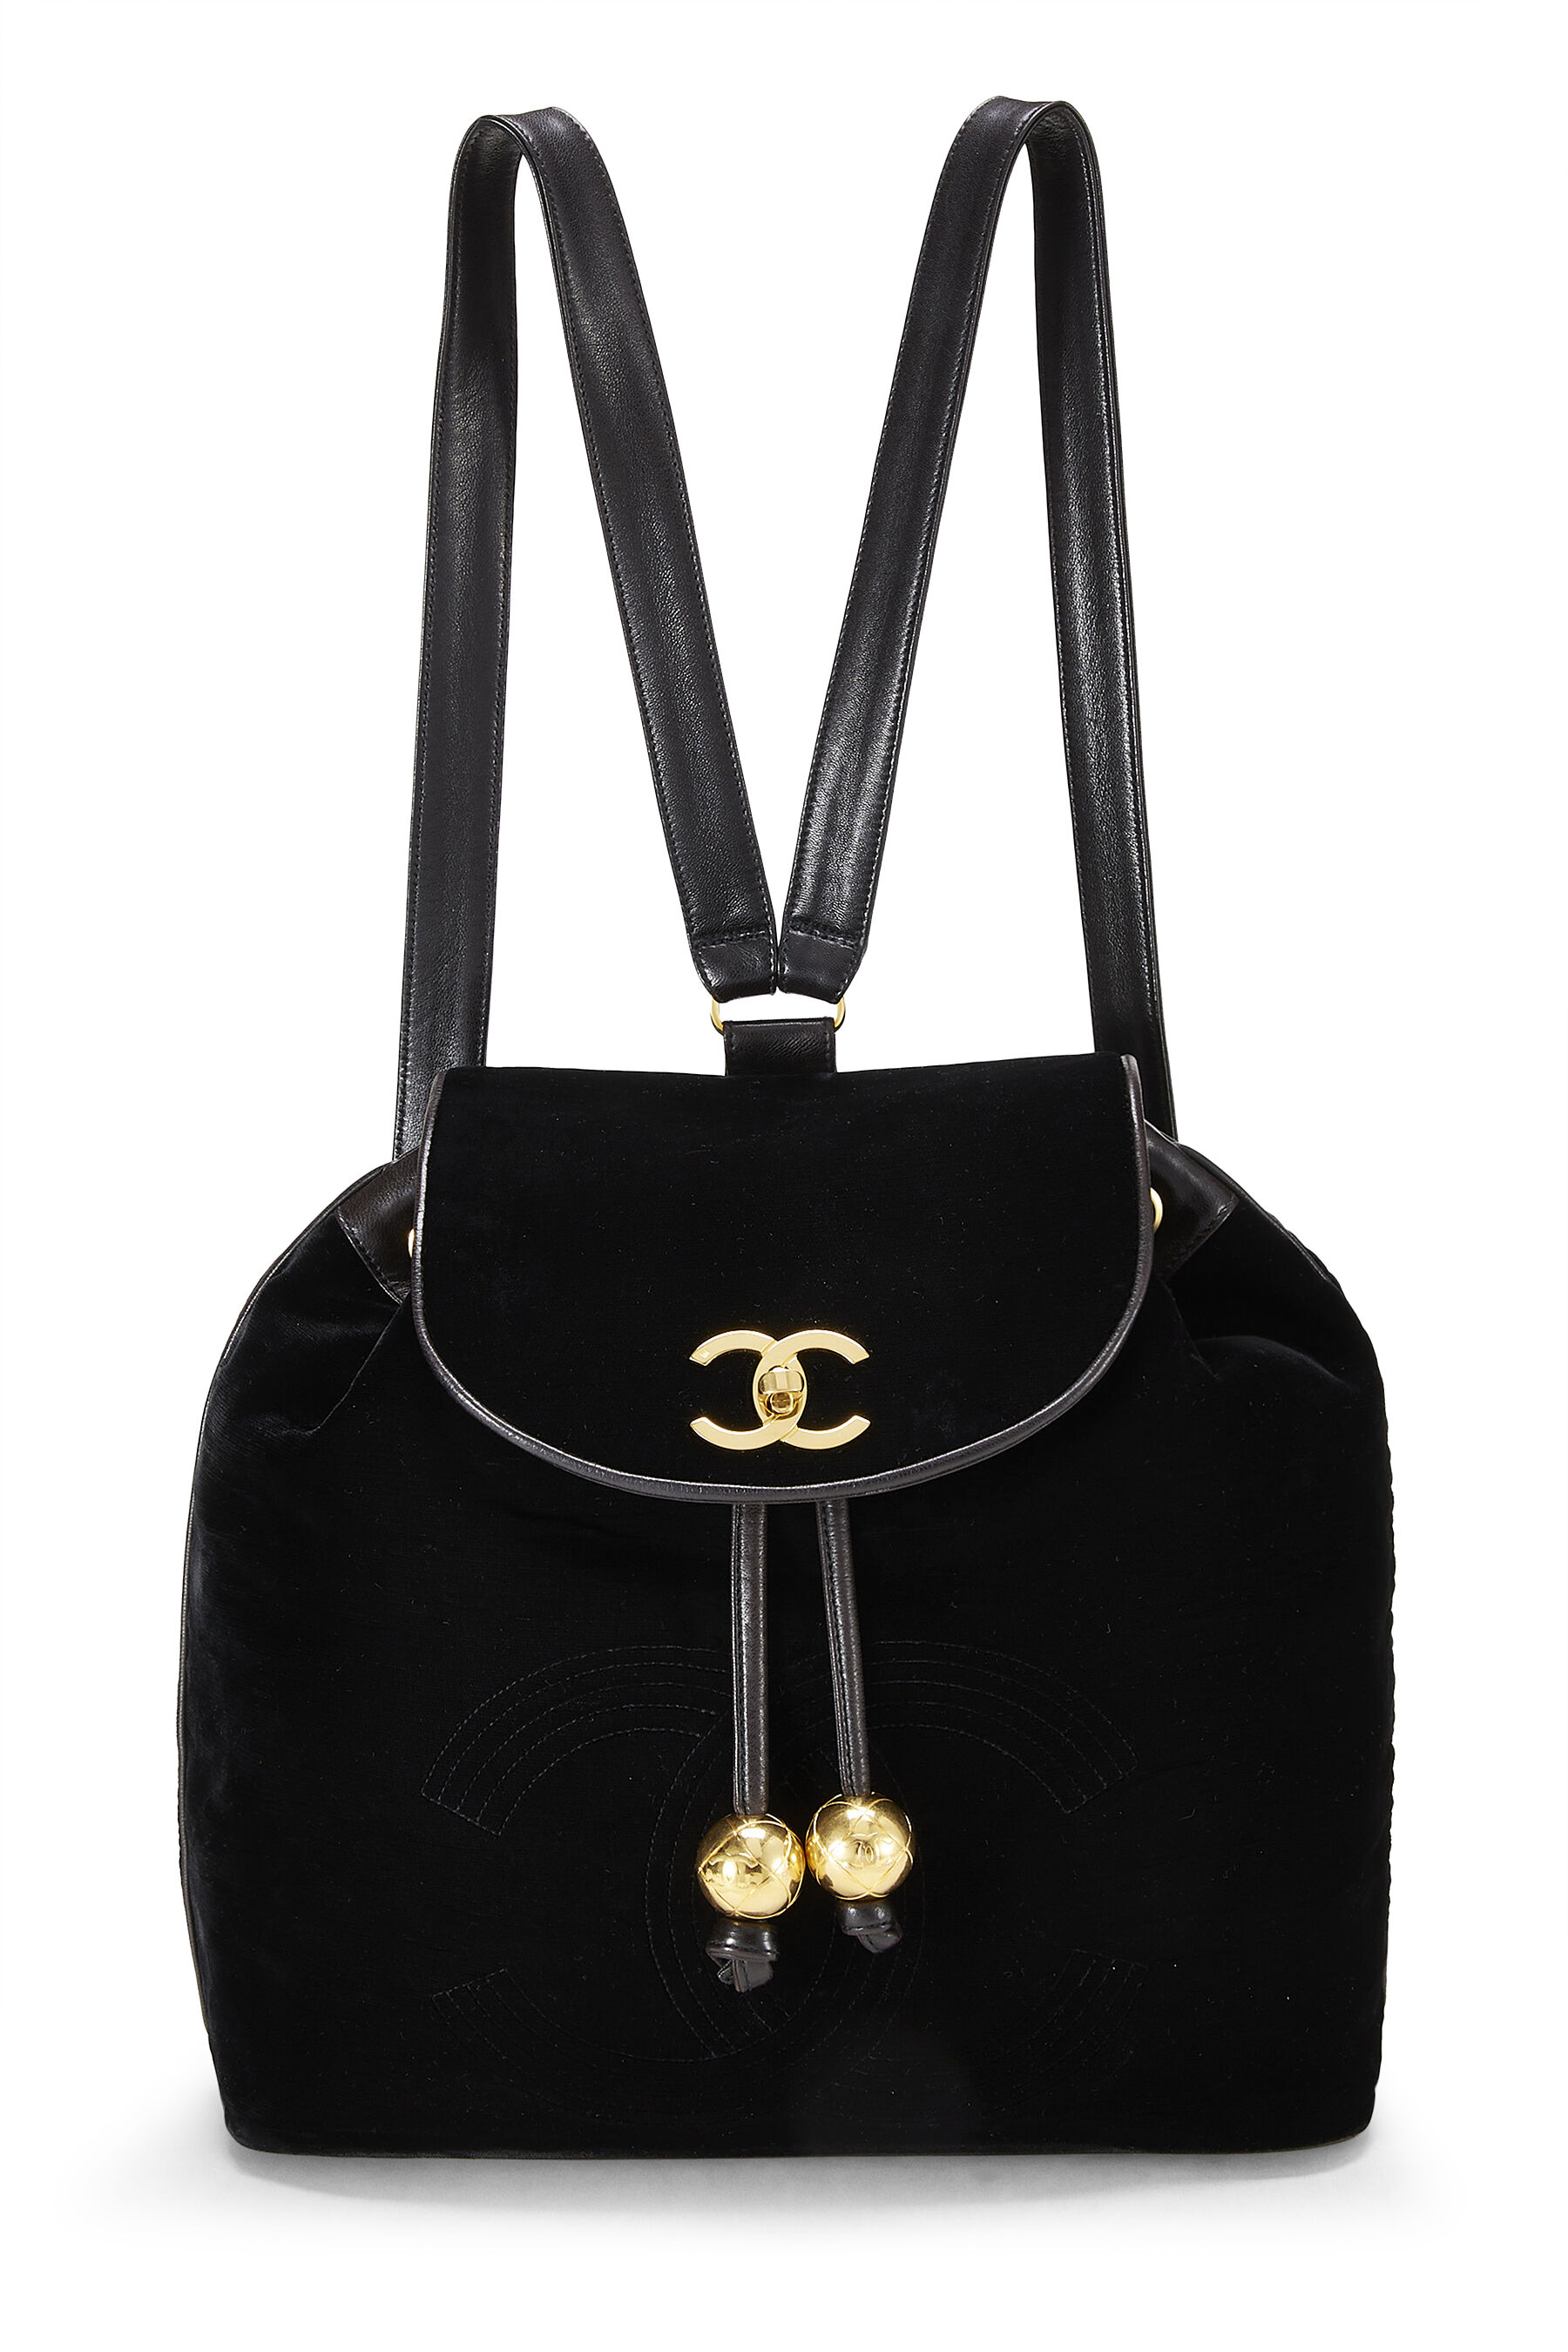 Chanel - Black Velour 'CC' Backpack